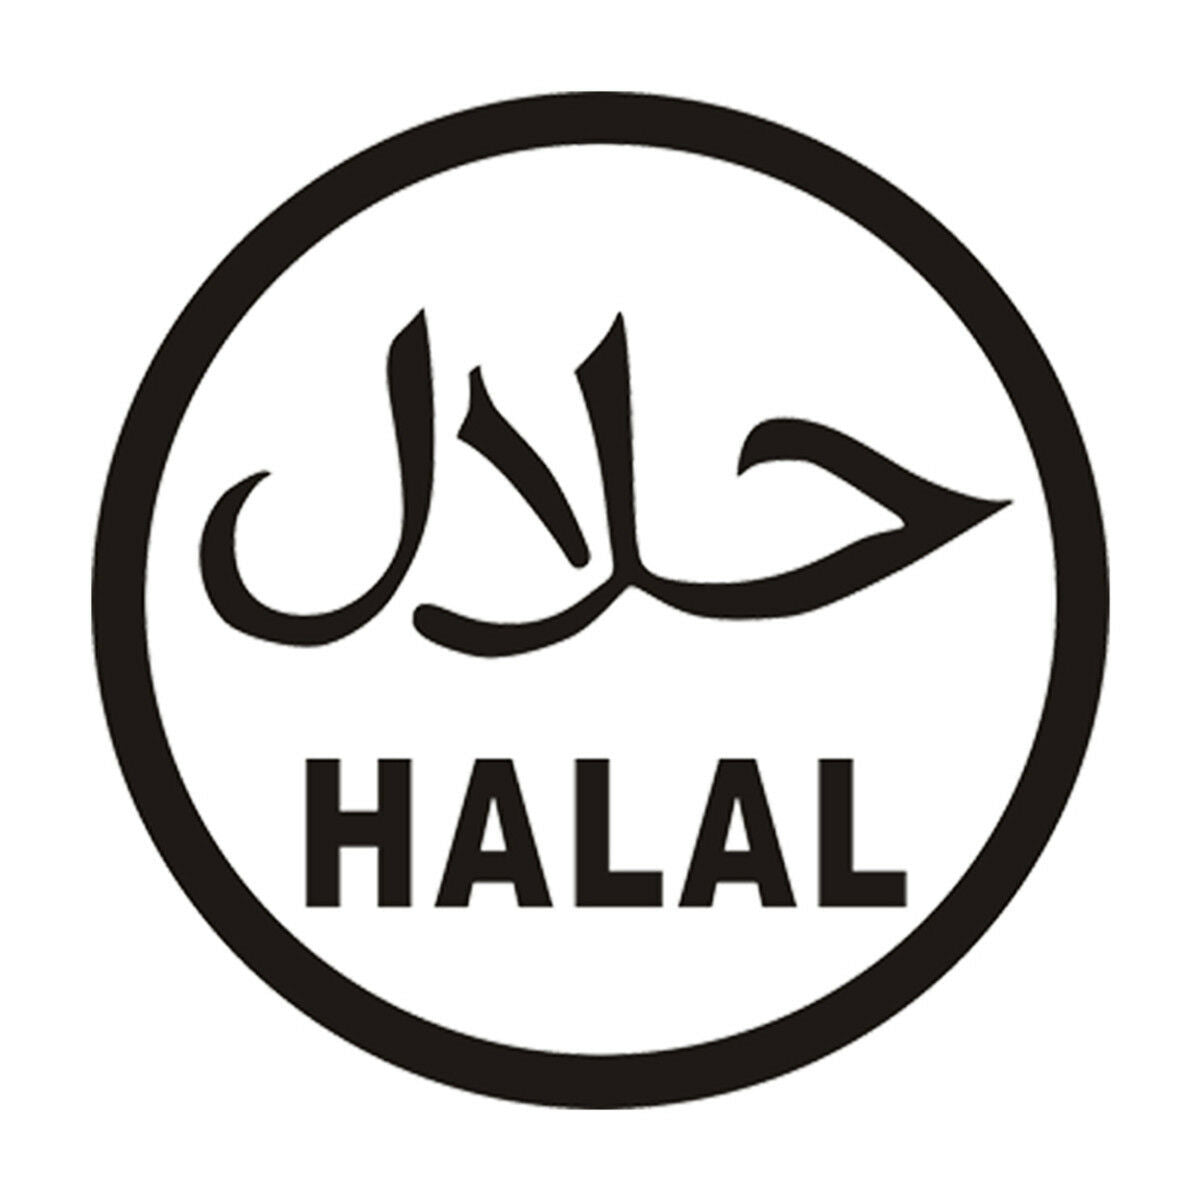 Halal Text Circle Badge Symbol Vinyl Decal Sticker